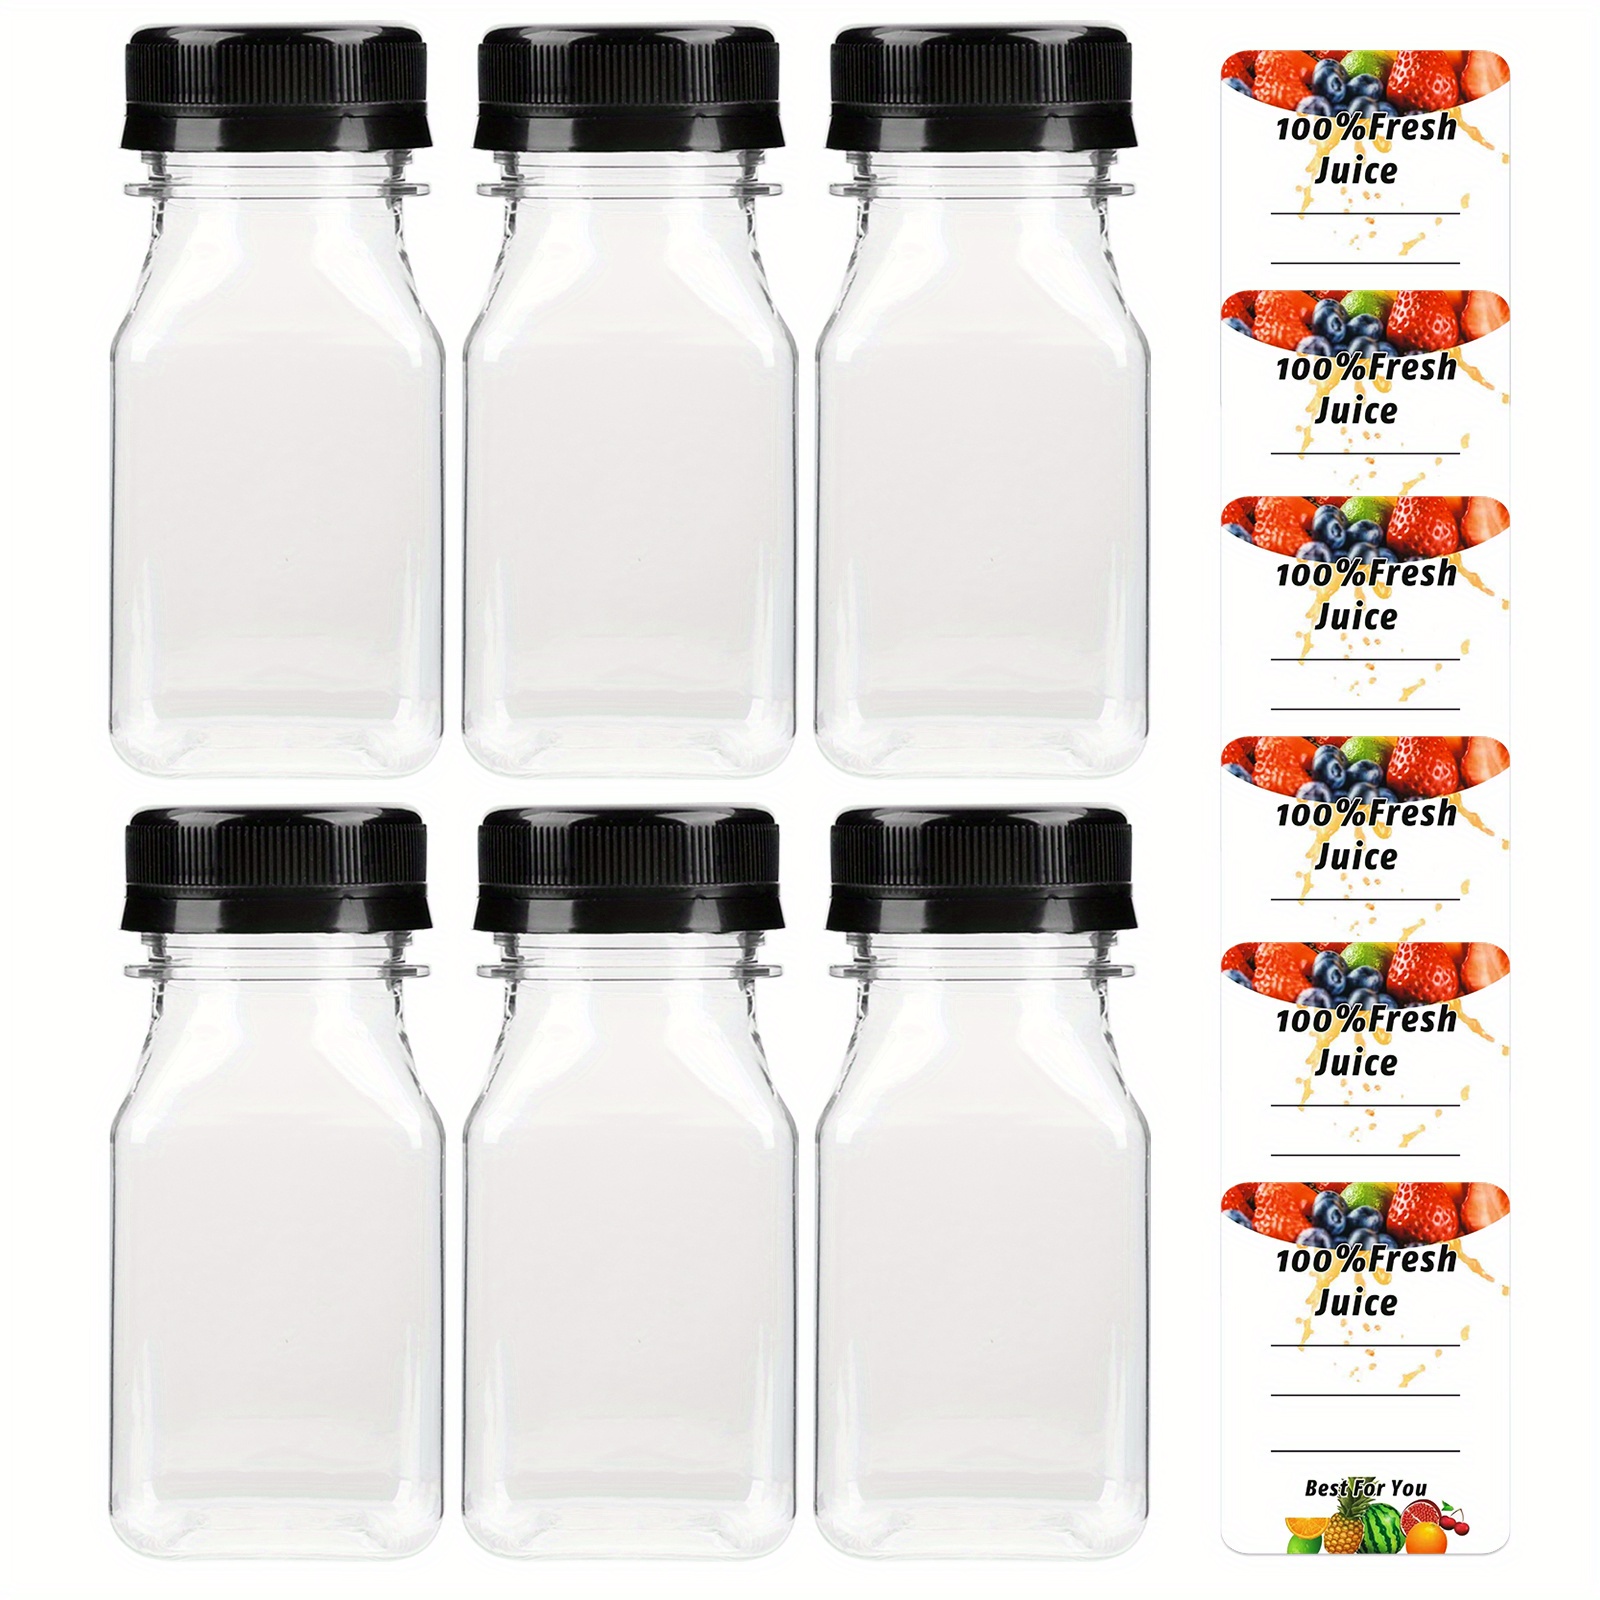 Bottles Bottle Juicedrink Beverageemptycontainers Fridge Glass